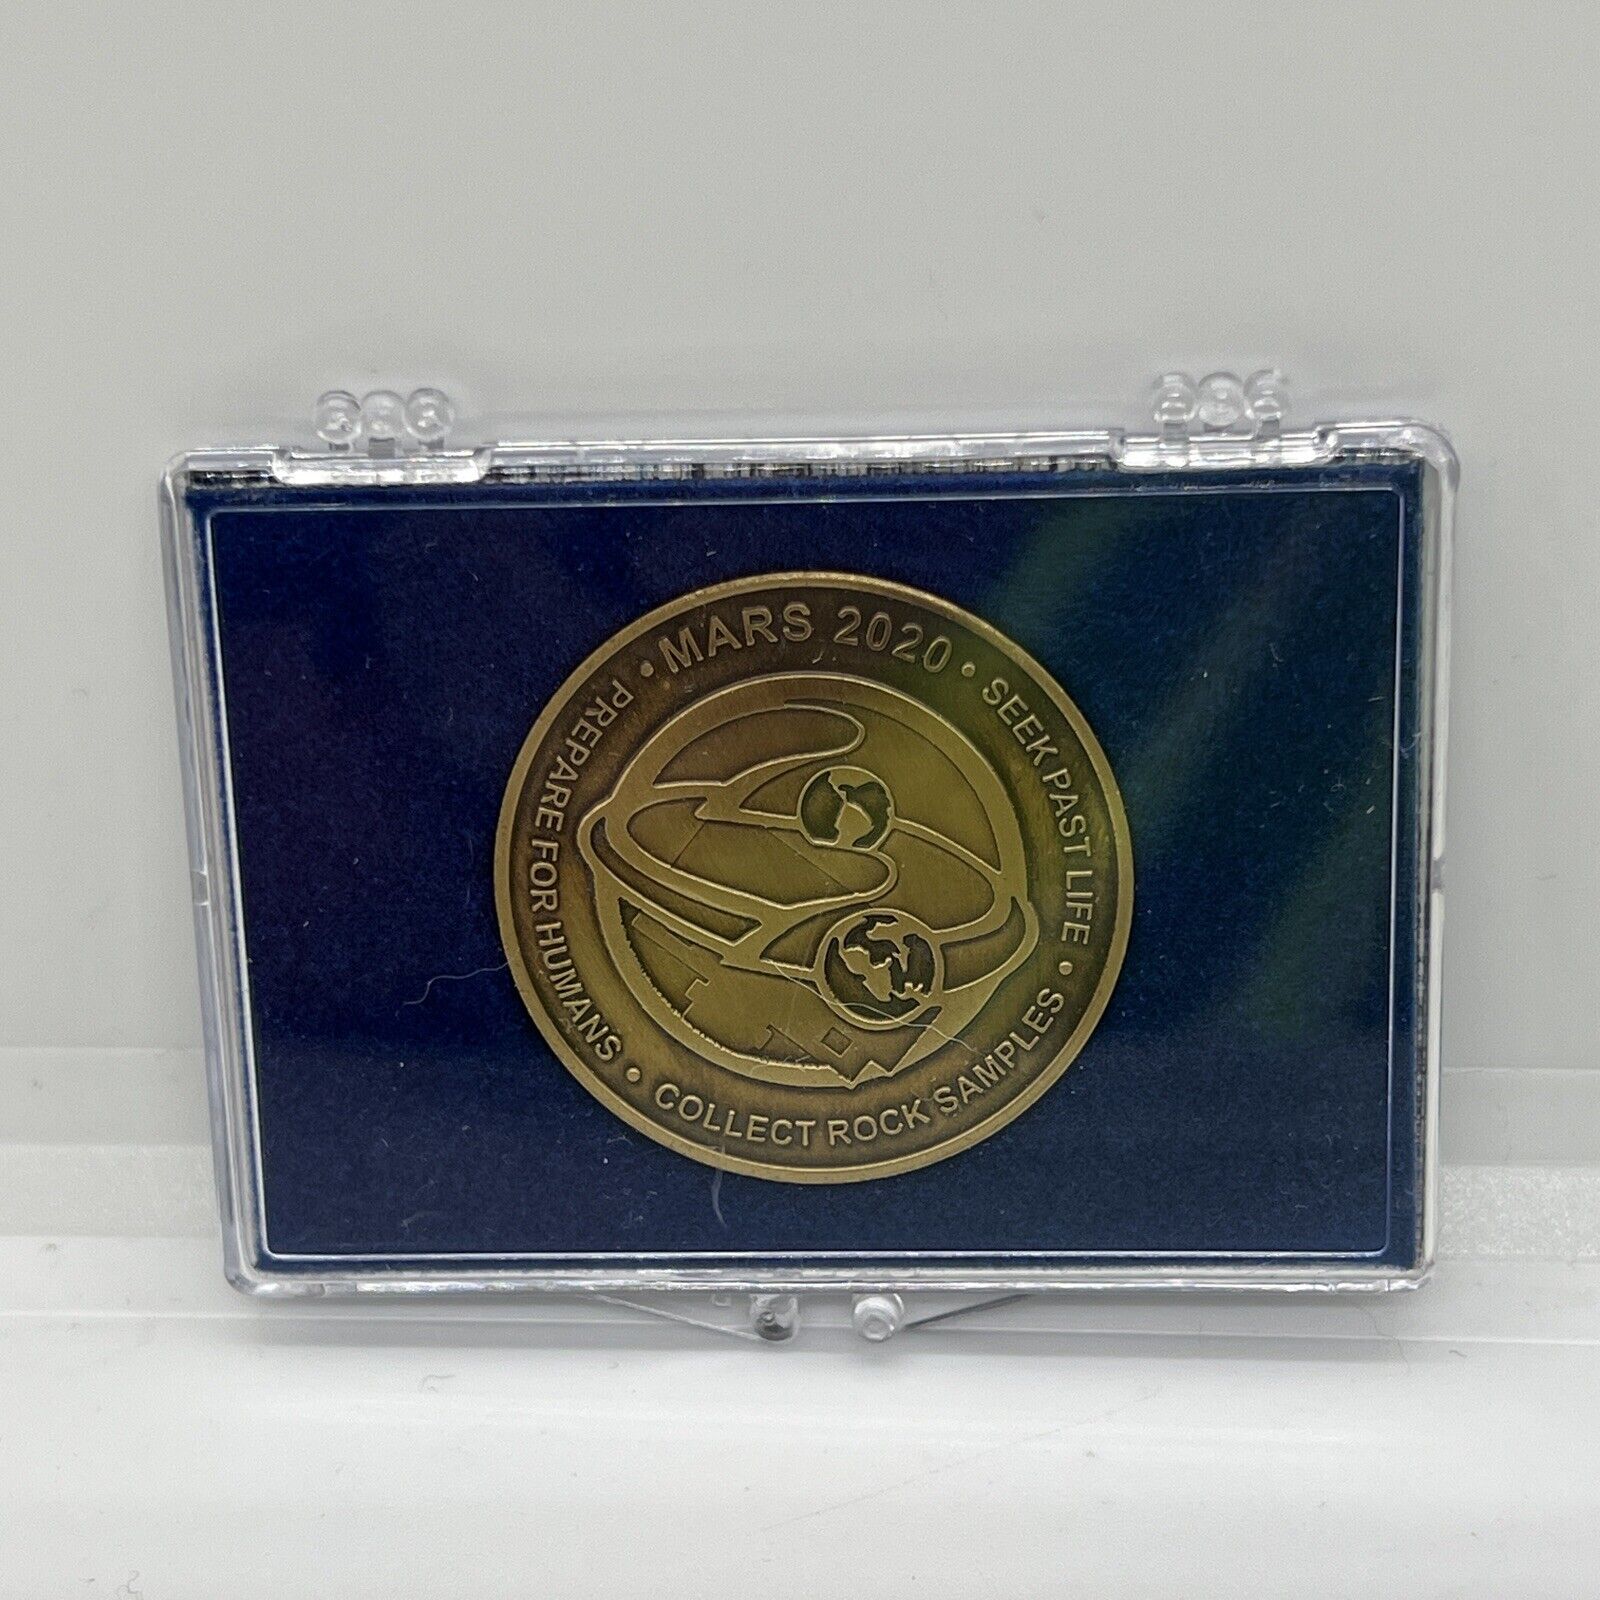 MARS 2020 Bronze Coin - 2 Sided With NASA Logo